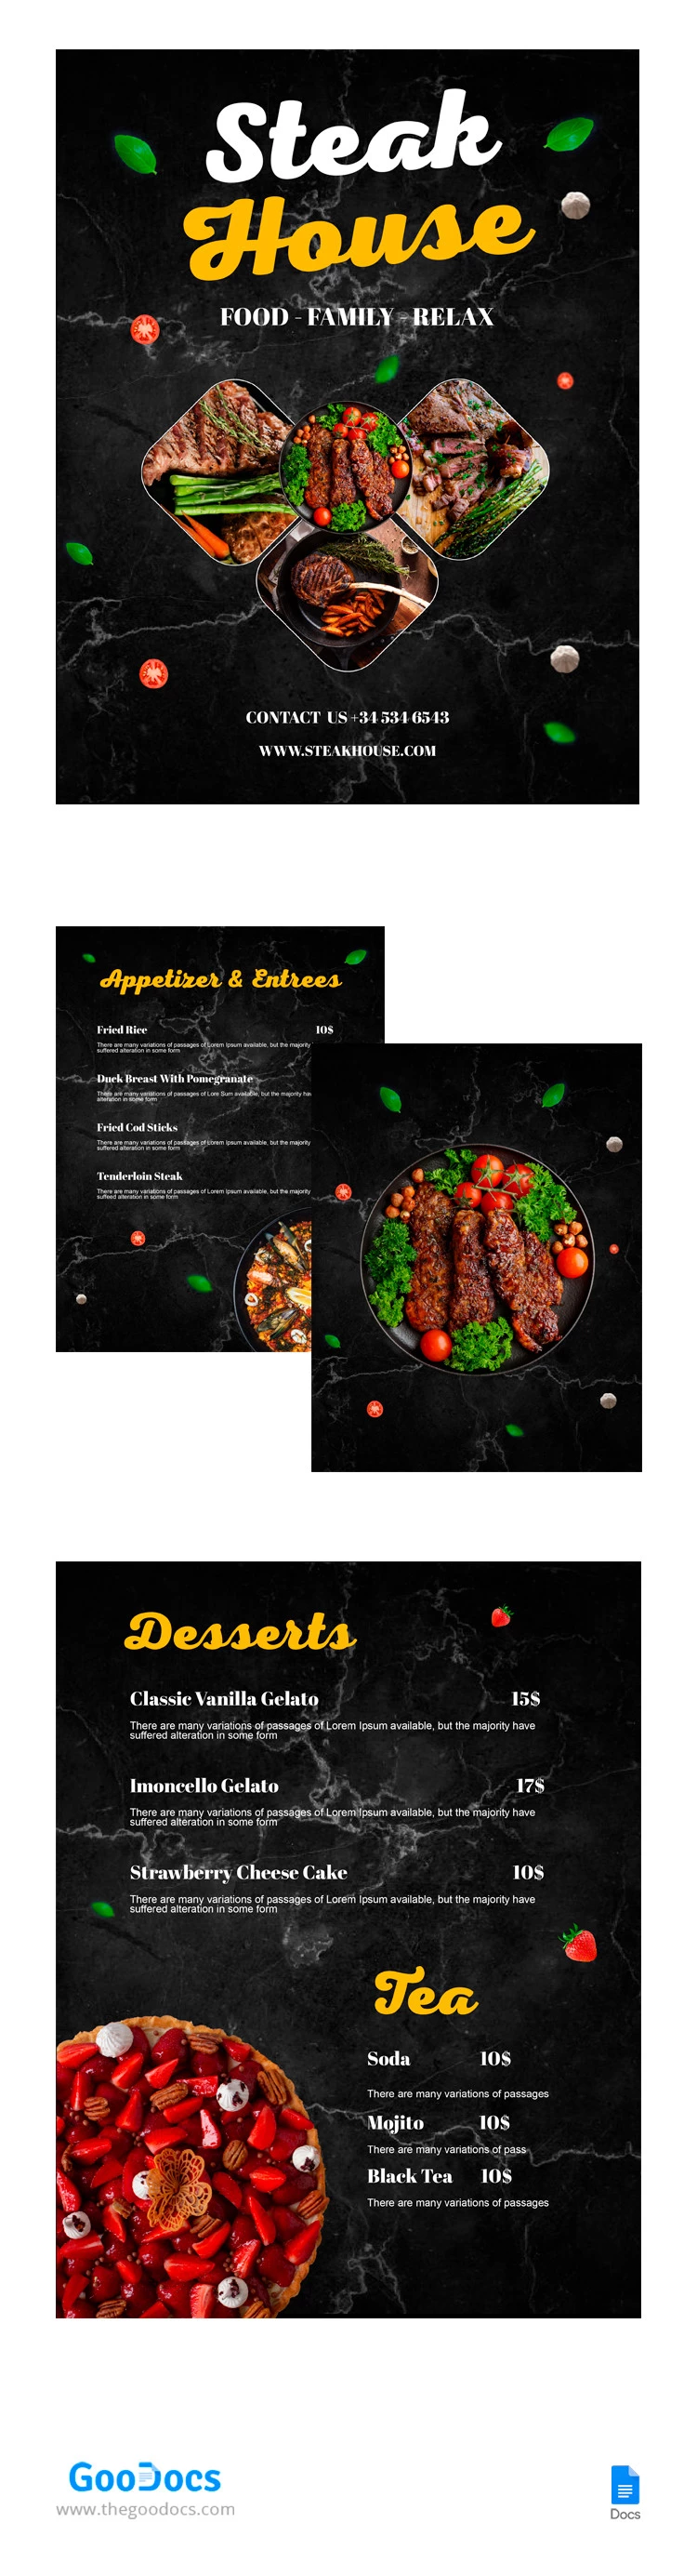 Menu del ristorante di carne - free Google Docs Template - 10065320